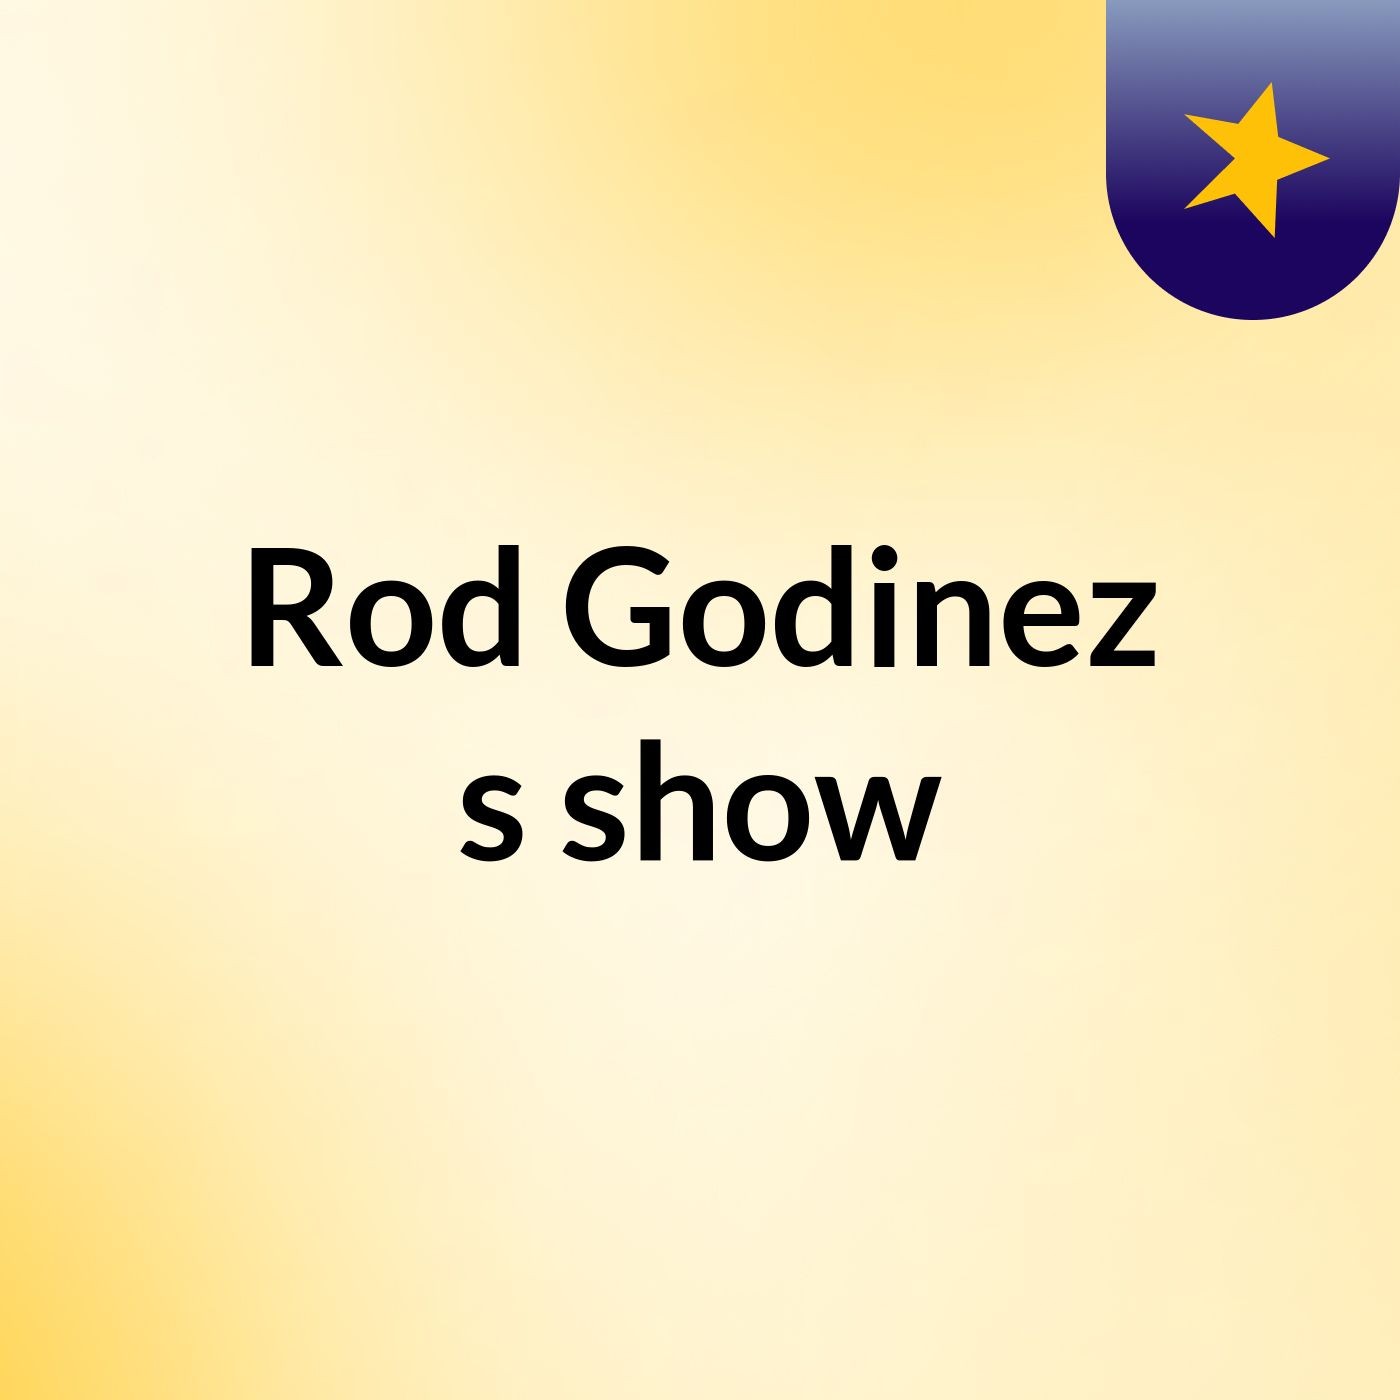 Episode 6 - Rod Godinez's show